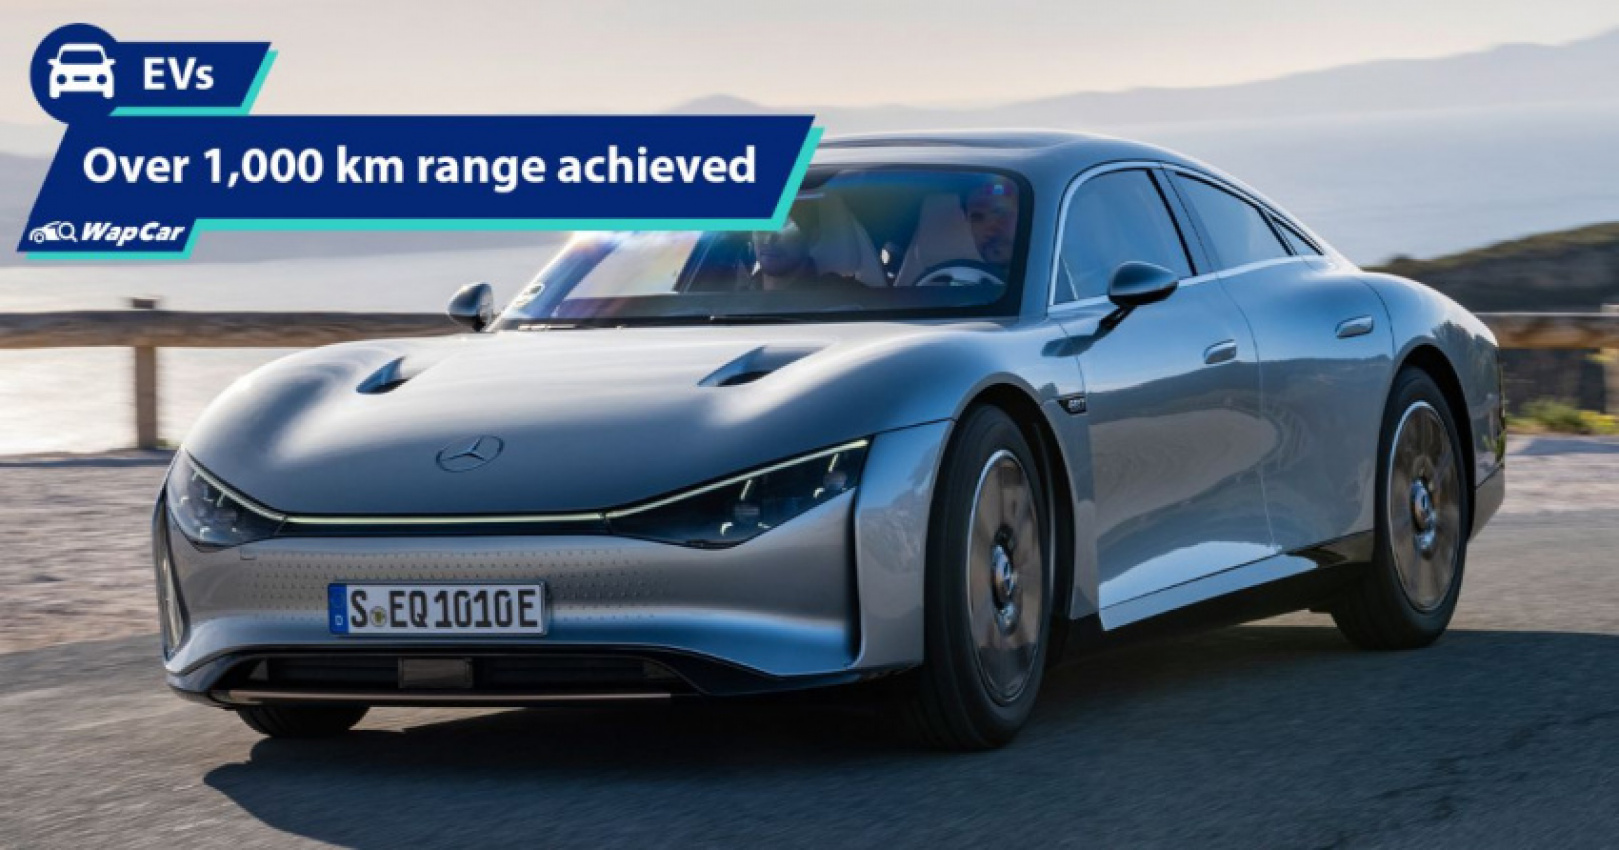 World’s longest EV range Mercedes Vision EQXX achieves over 1,000 km